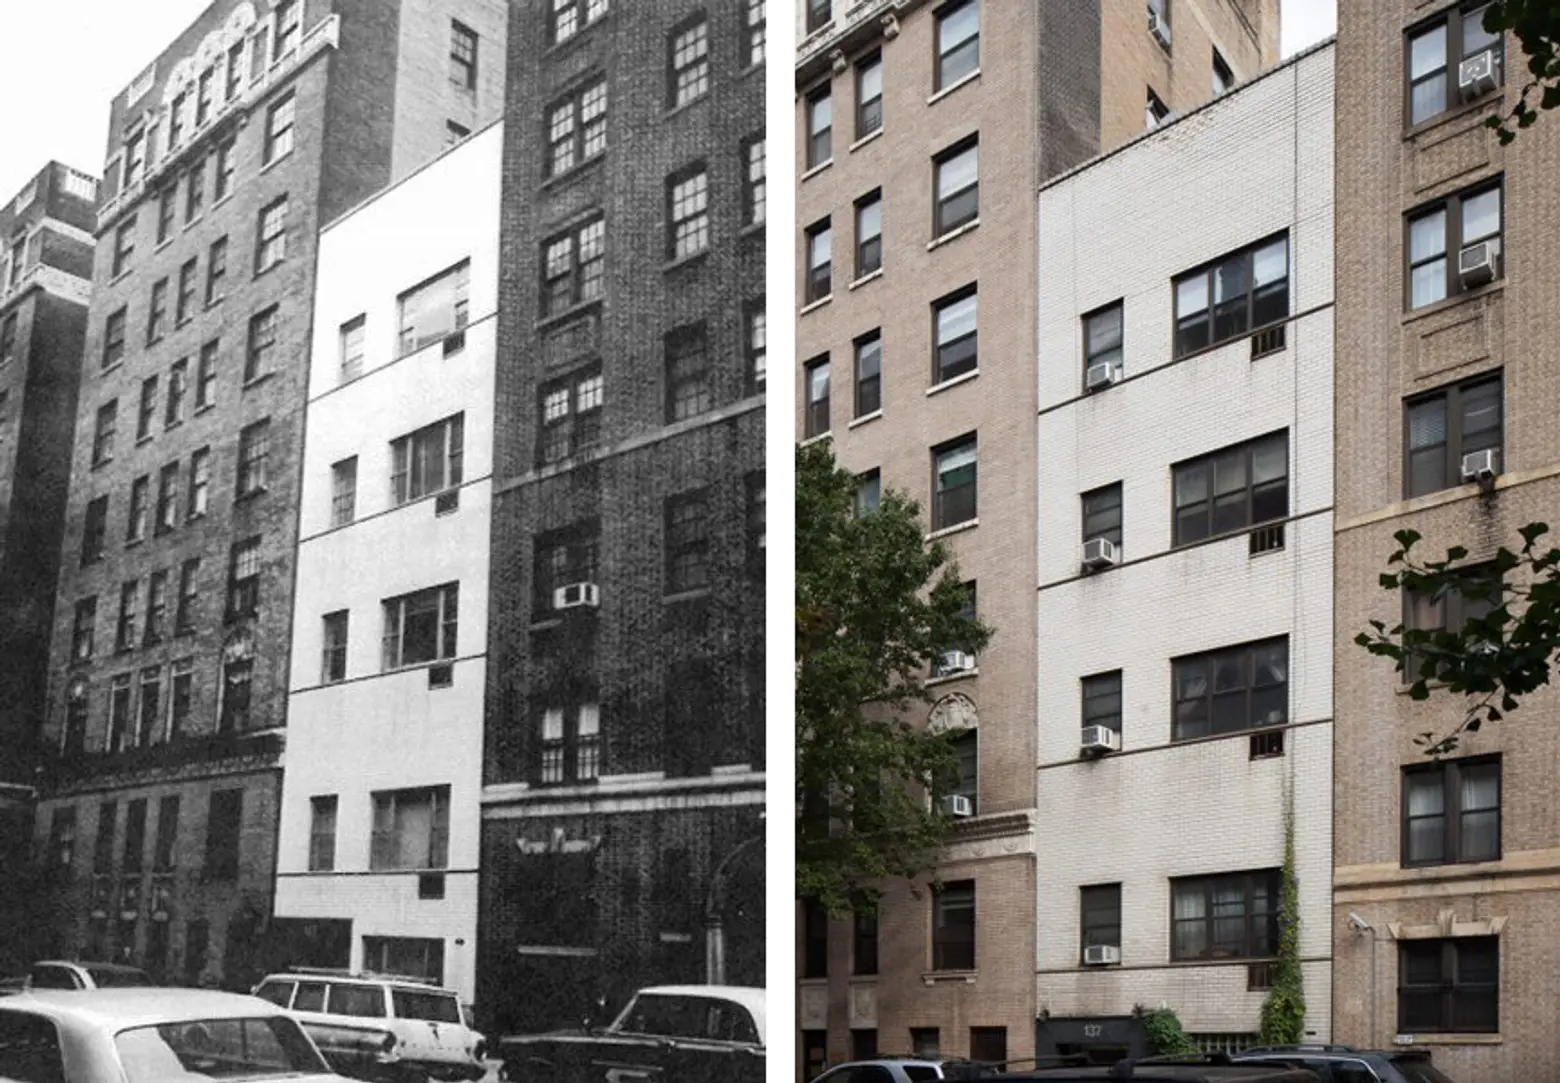 James Baldwin’s former Upper West Side home receives national landmark status